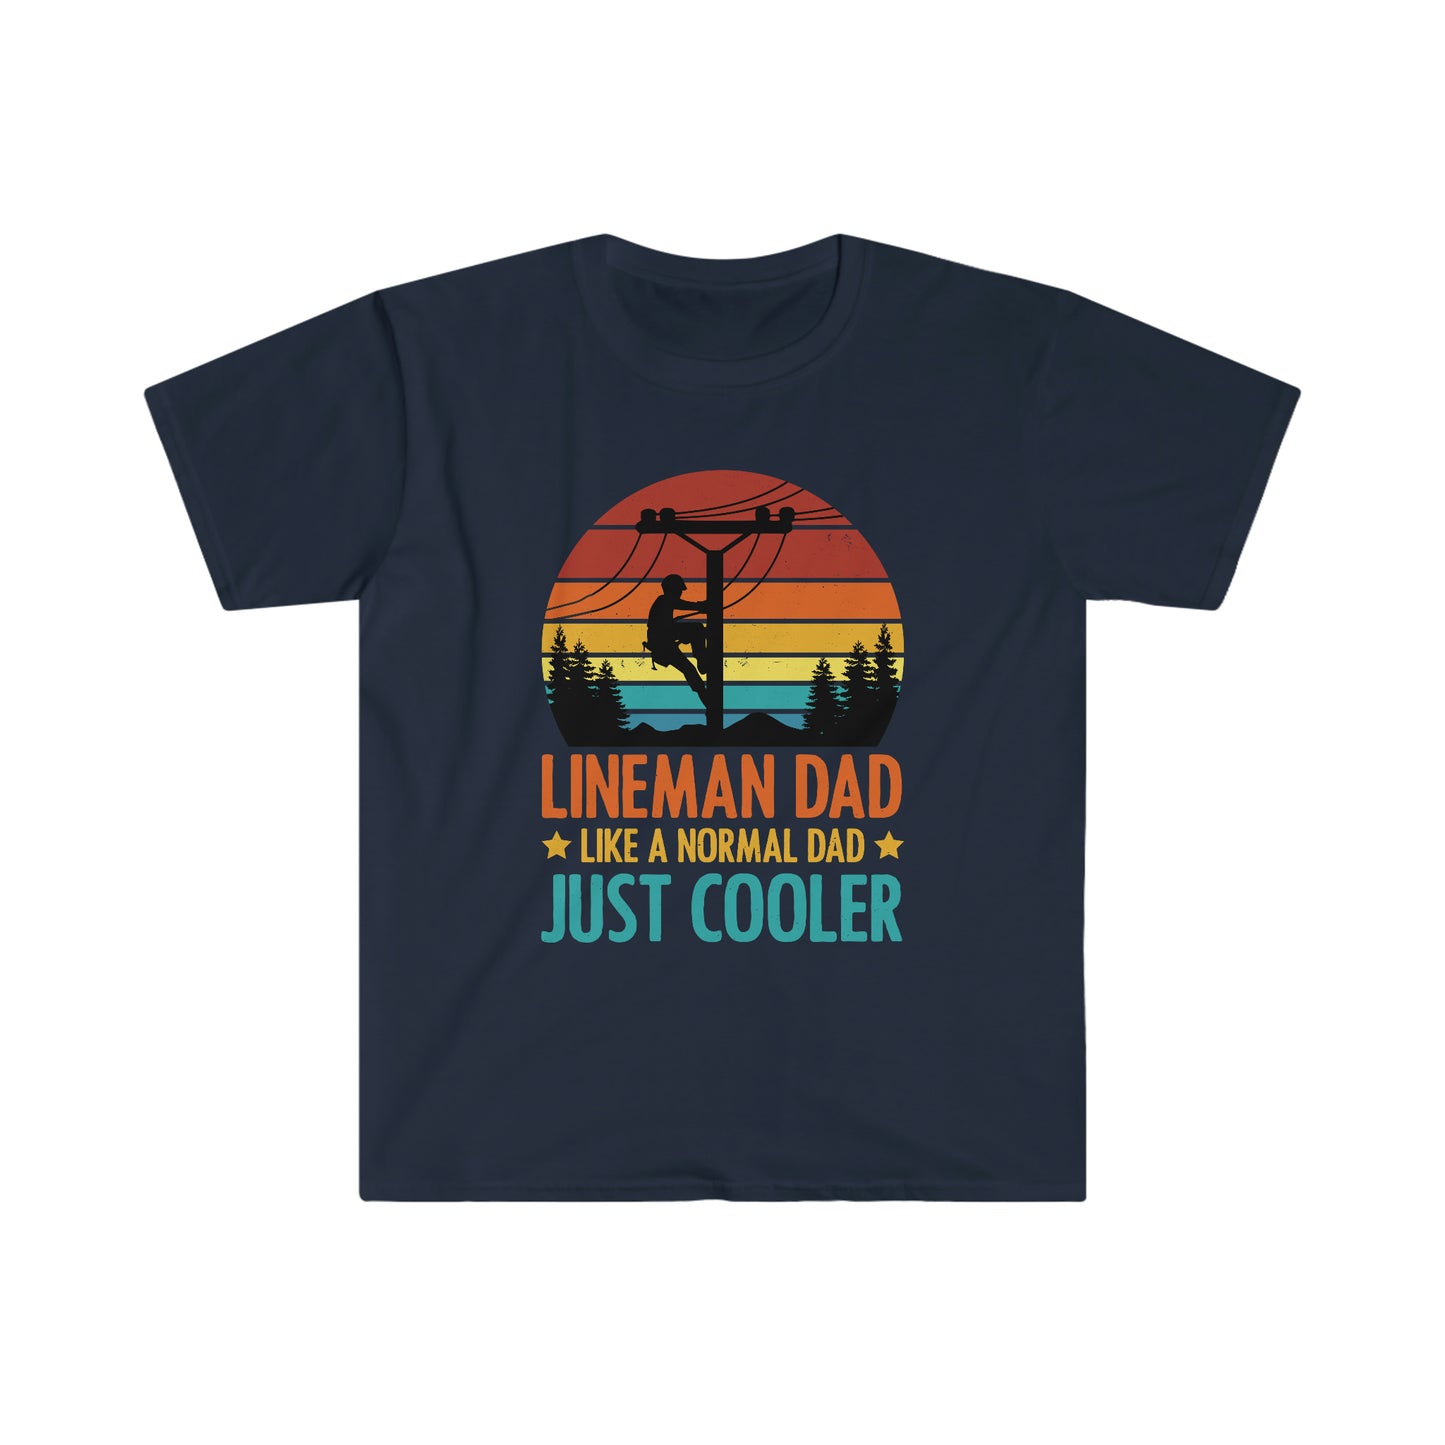 Lineman Dad Shirt, Father's Day Tshirt, Funny Dad Shirt, Gift for Dad, Father's Day Gift, Lineman Tools Shirt